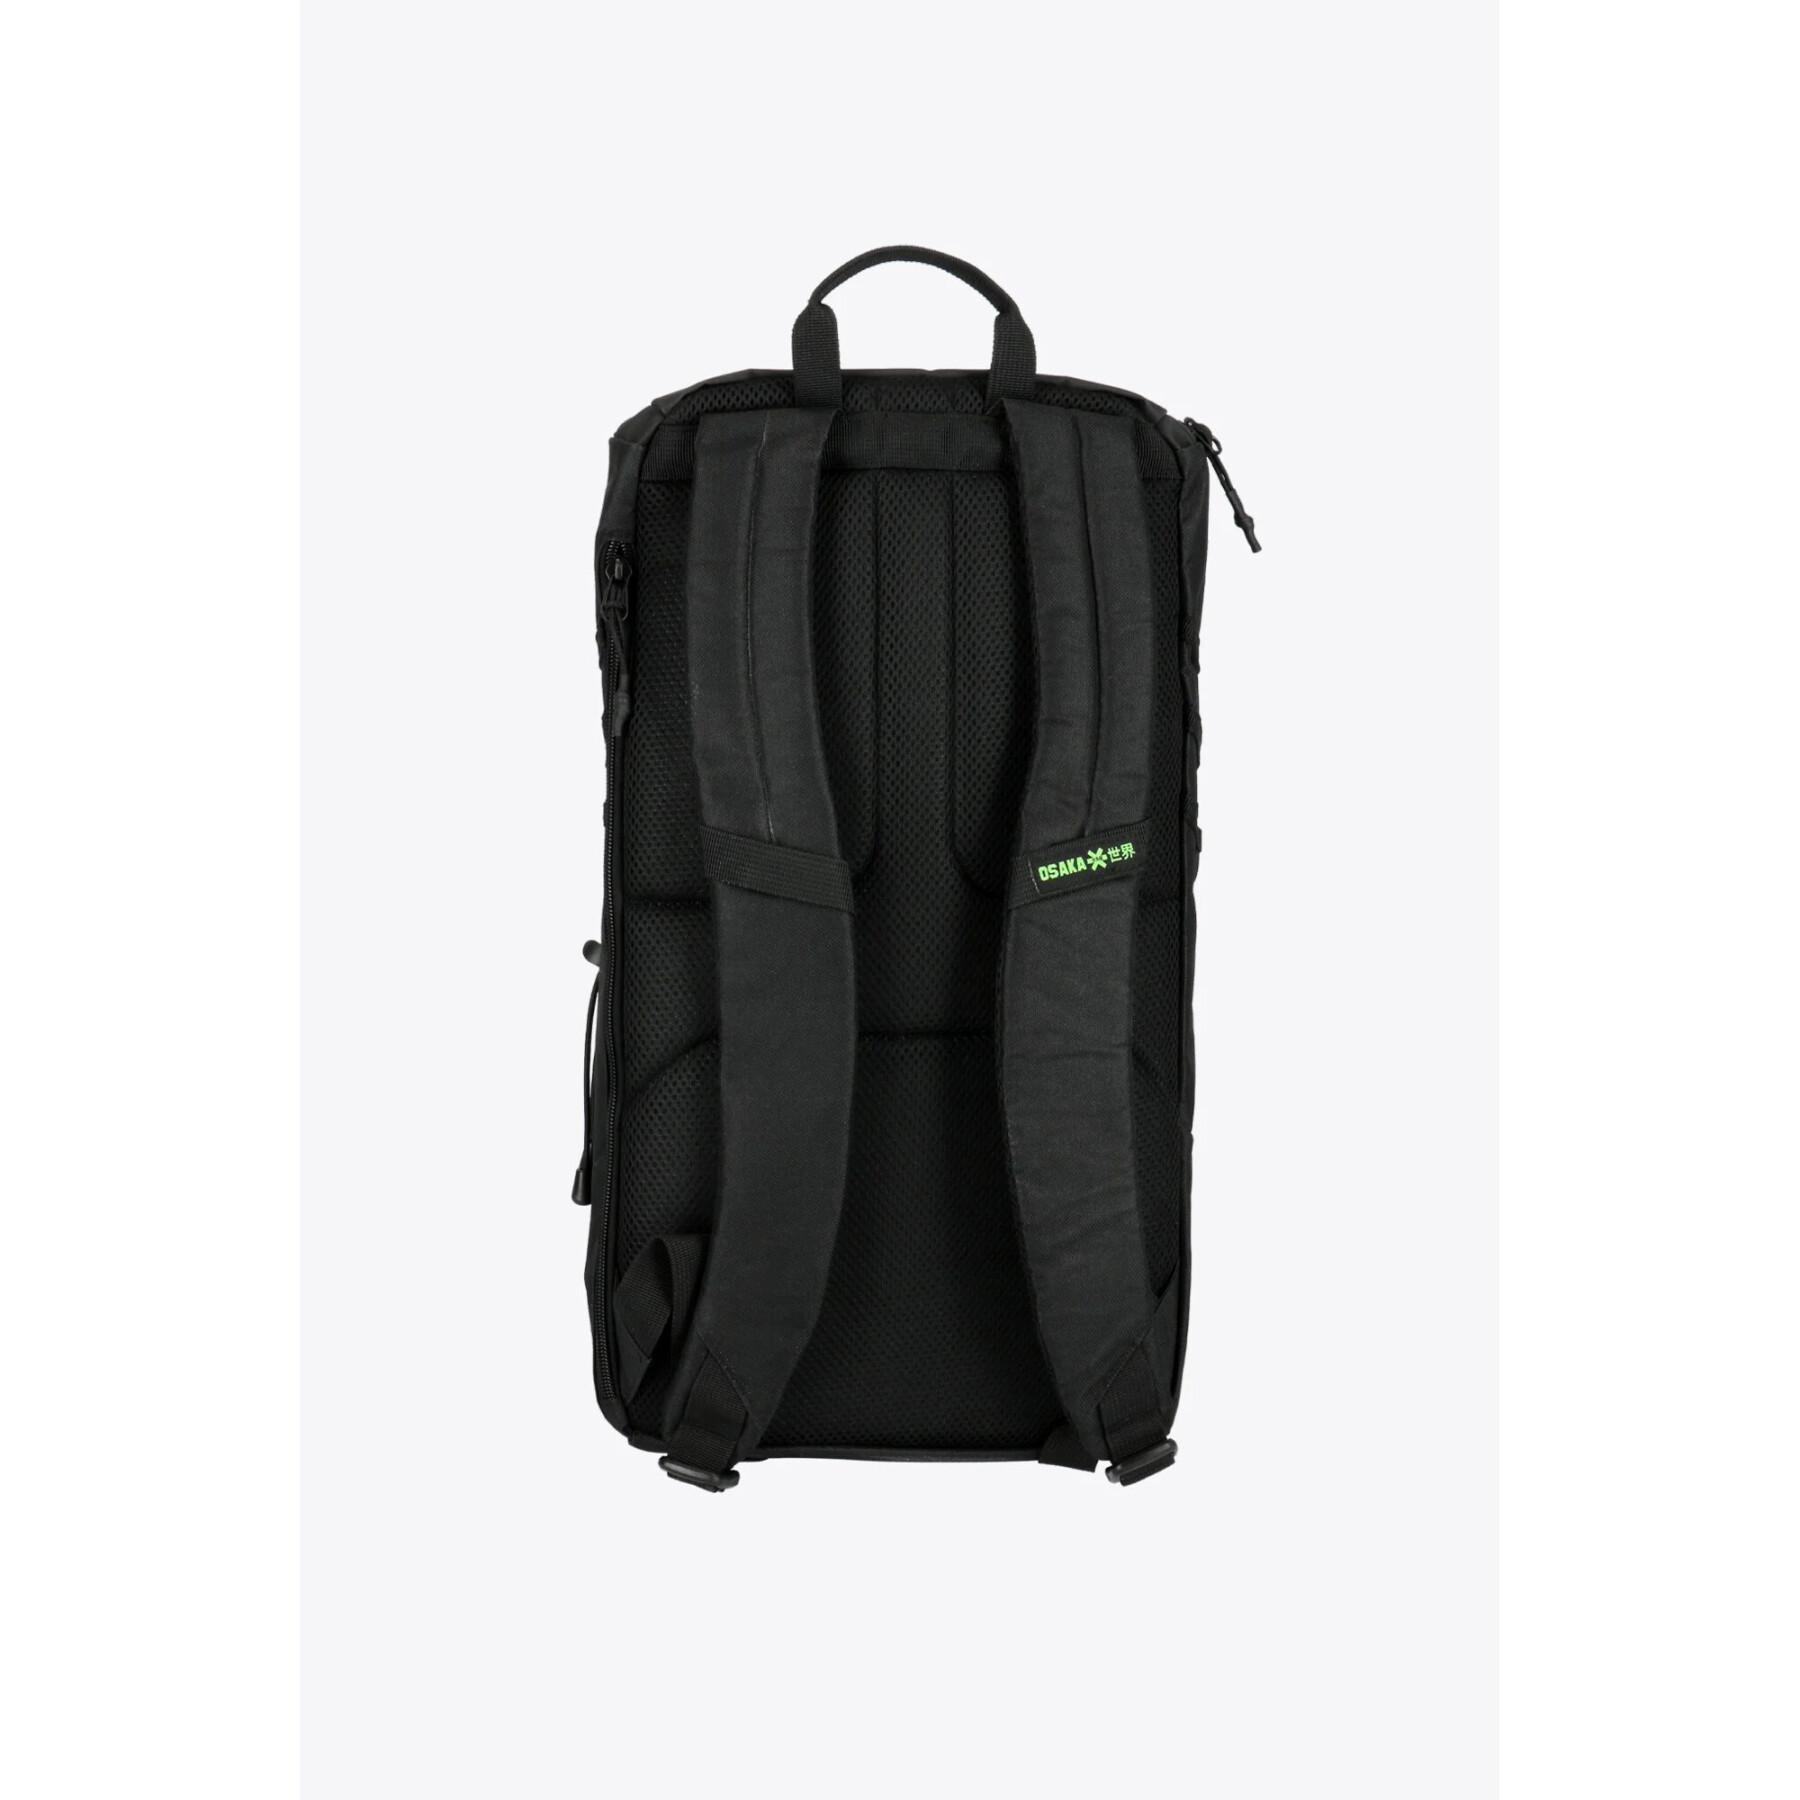 Backpack Osaka Vision - Backpacks - Bags - Equipment